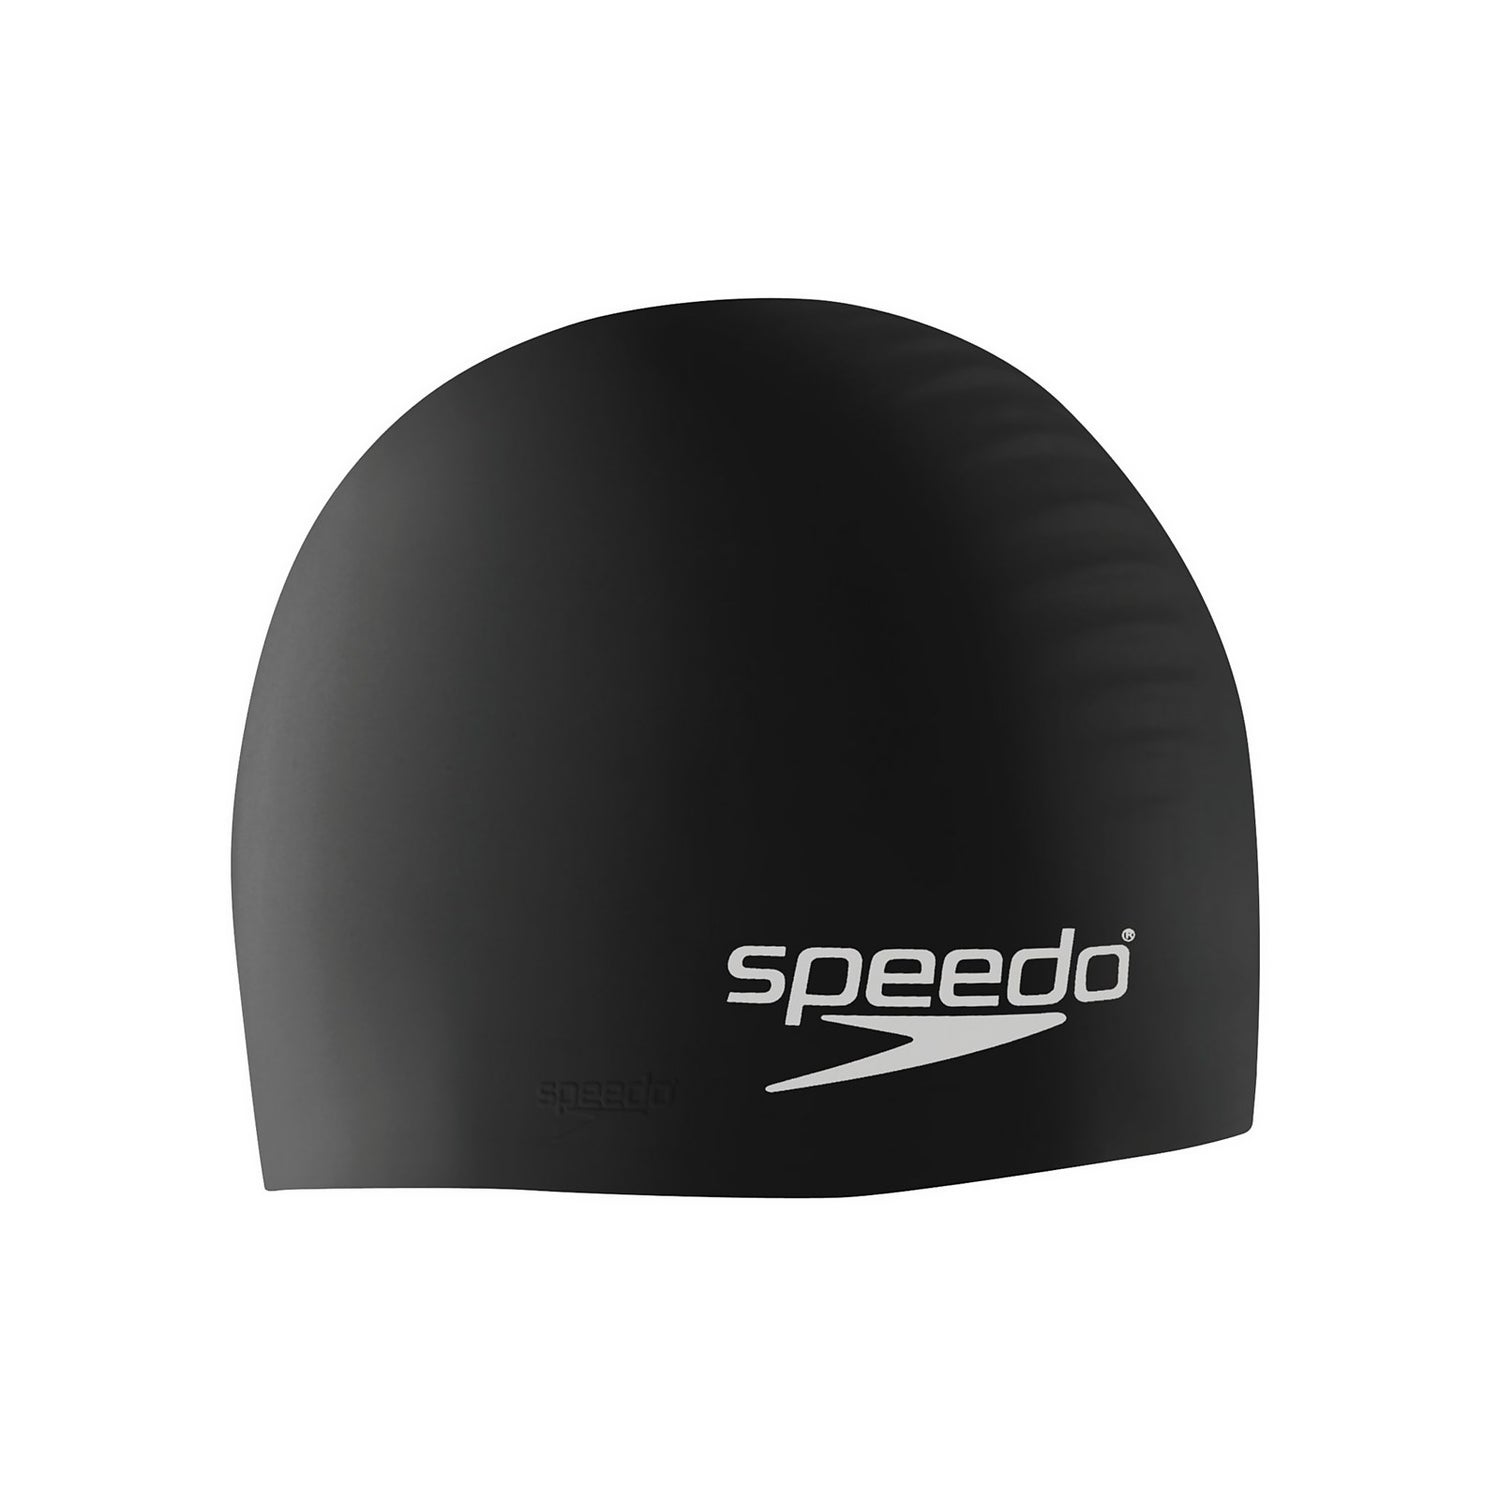 Speedo Silicone Racer Dome Swim Cap